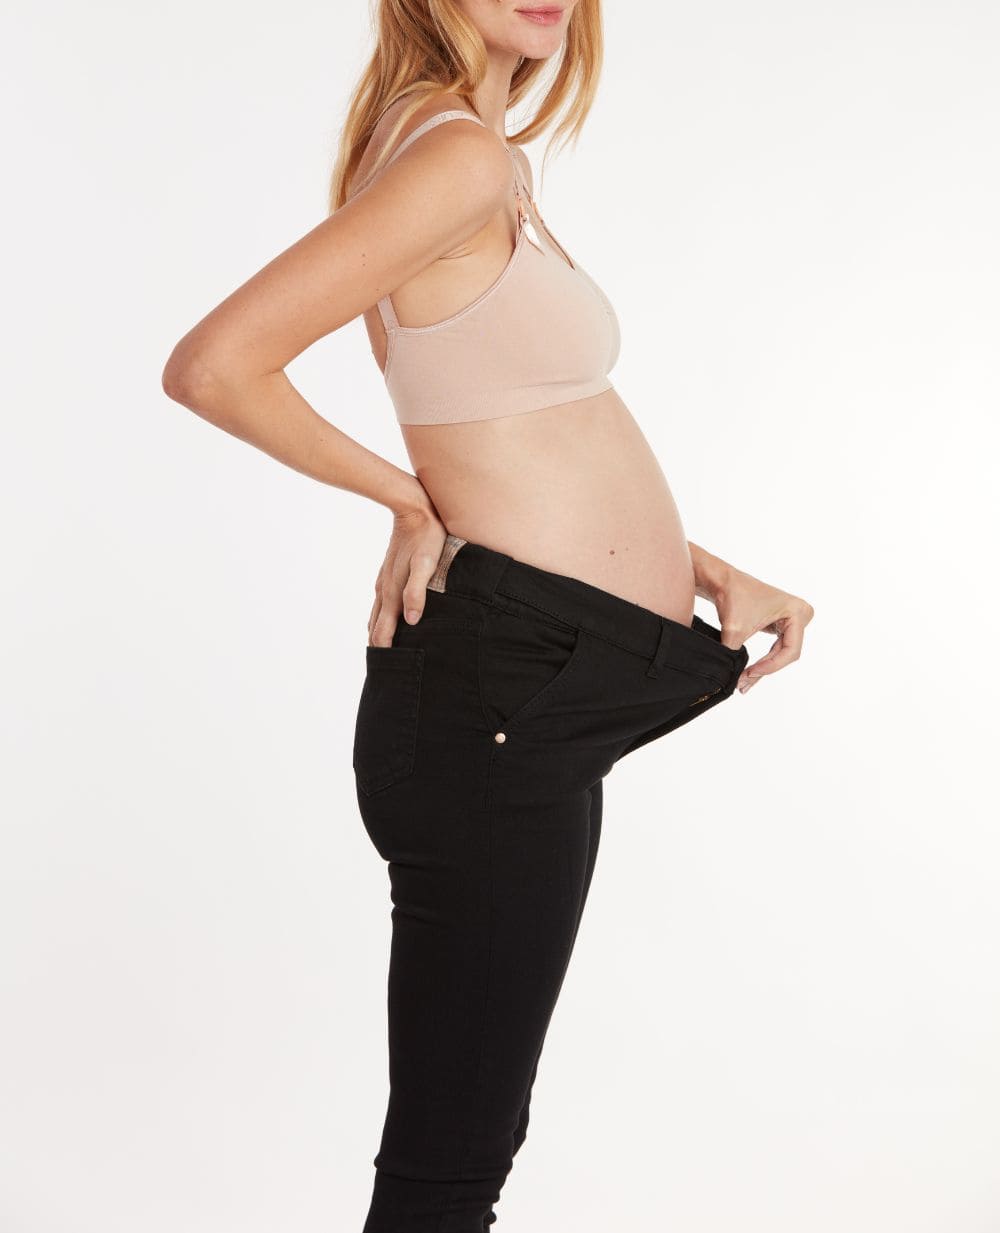 Jean pour femme enceinte, skinny, pantalon de maternité, pantalon